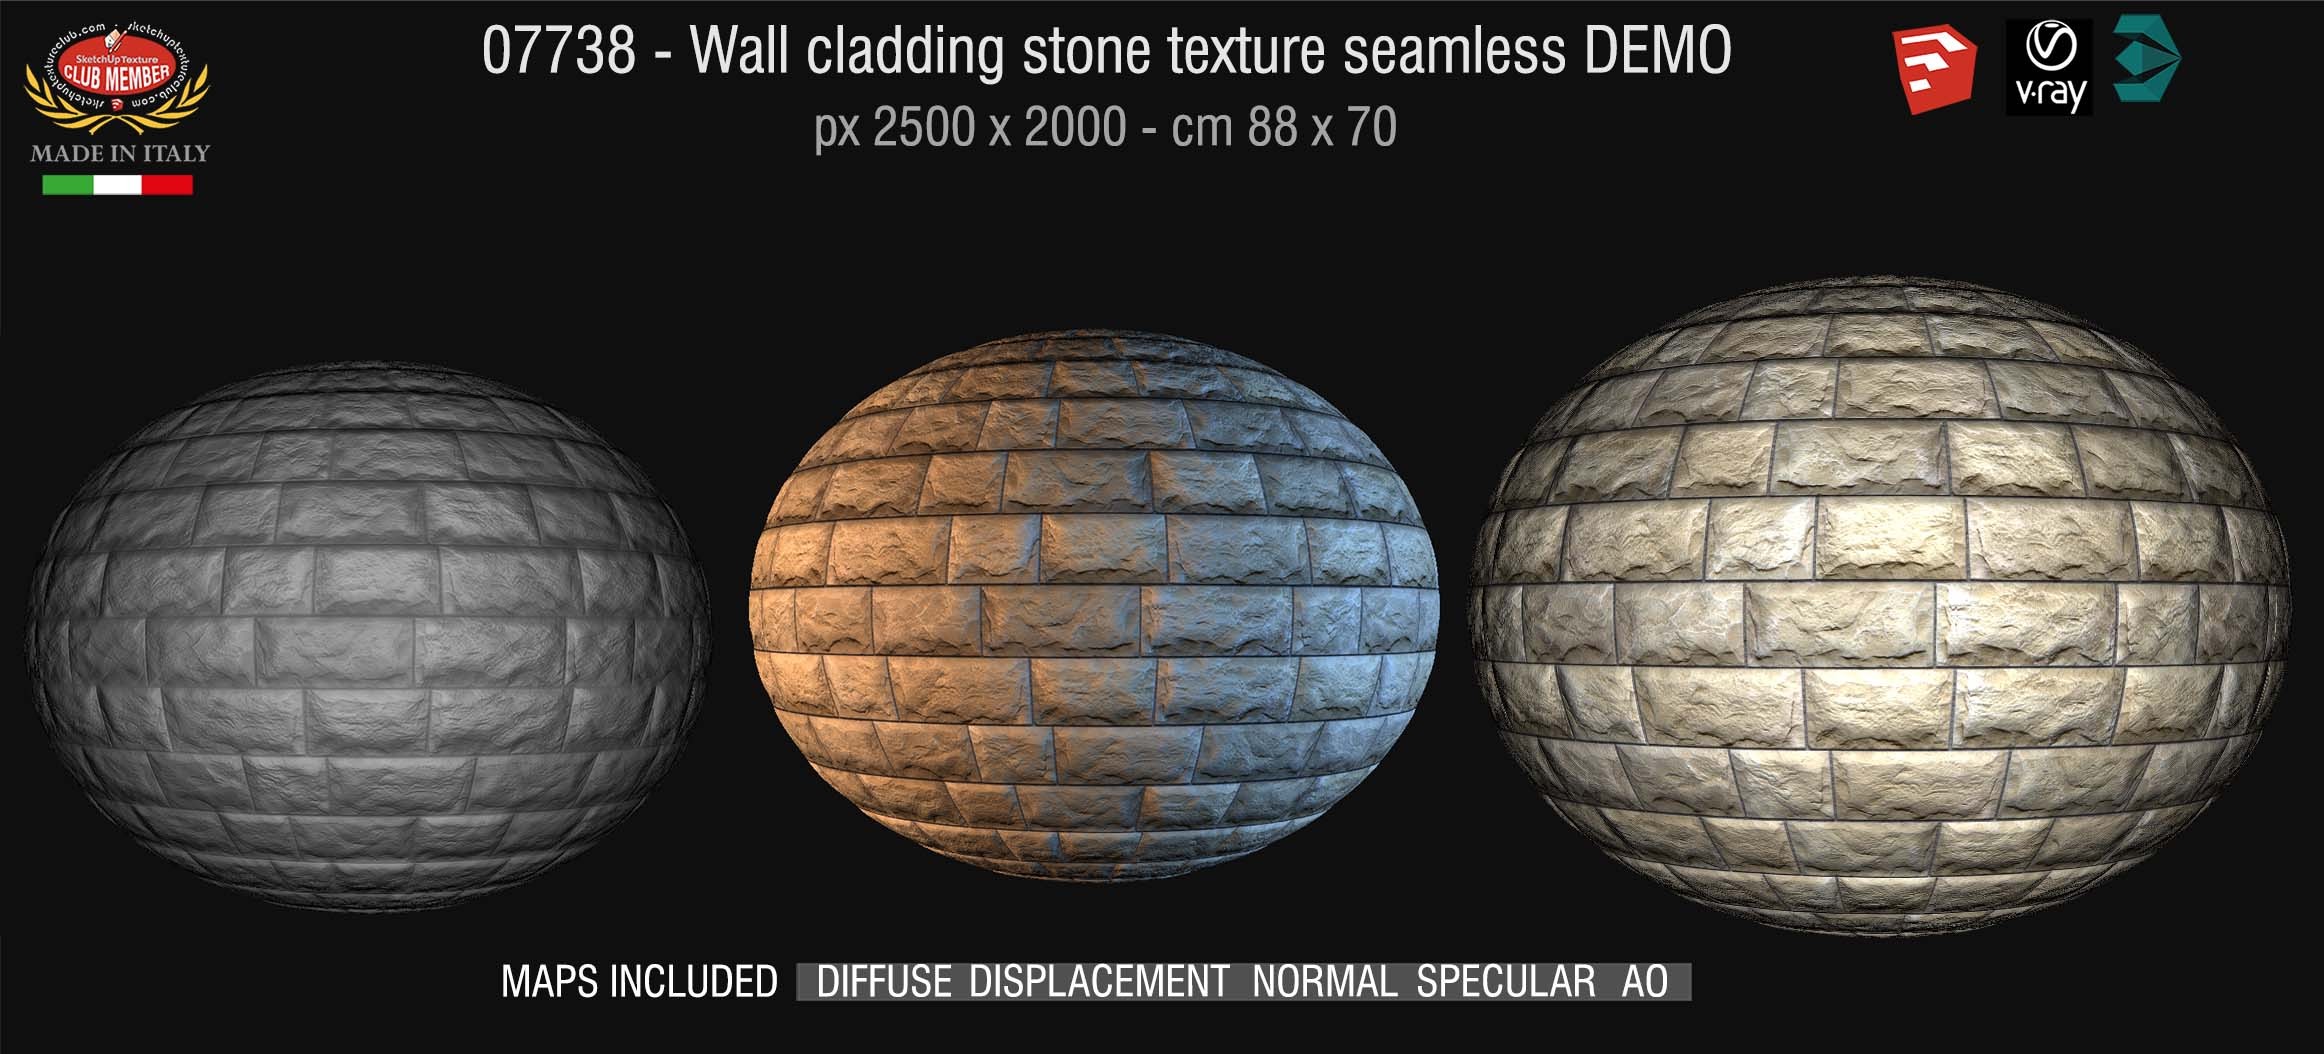 07738 HR Wall cladding stone texture seamless + maps DEMO